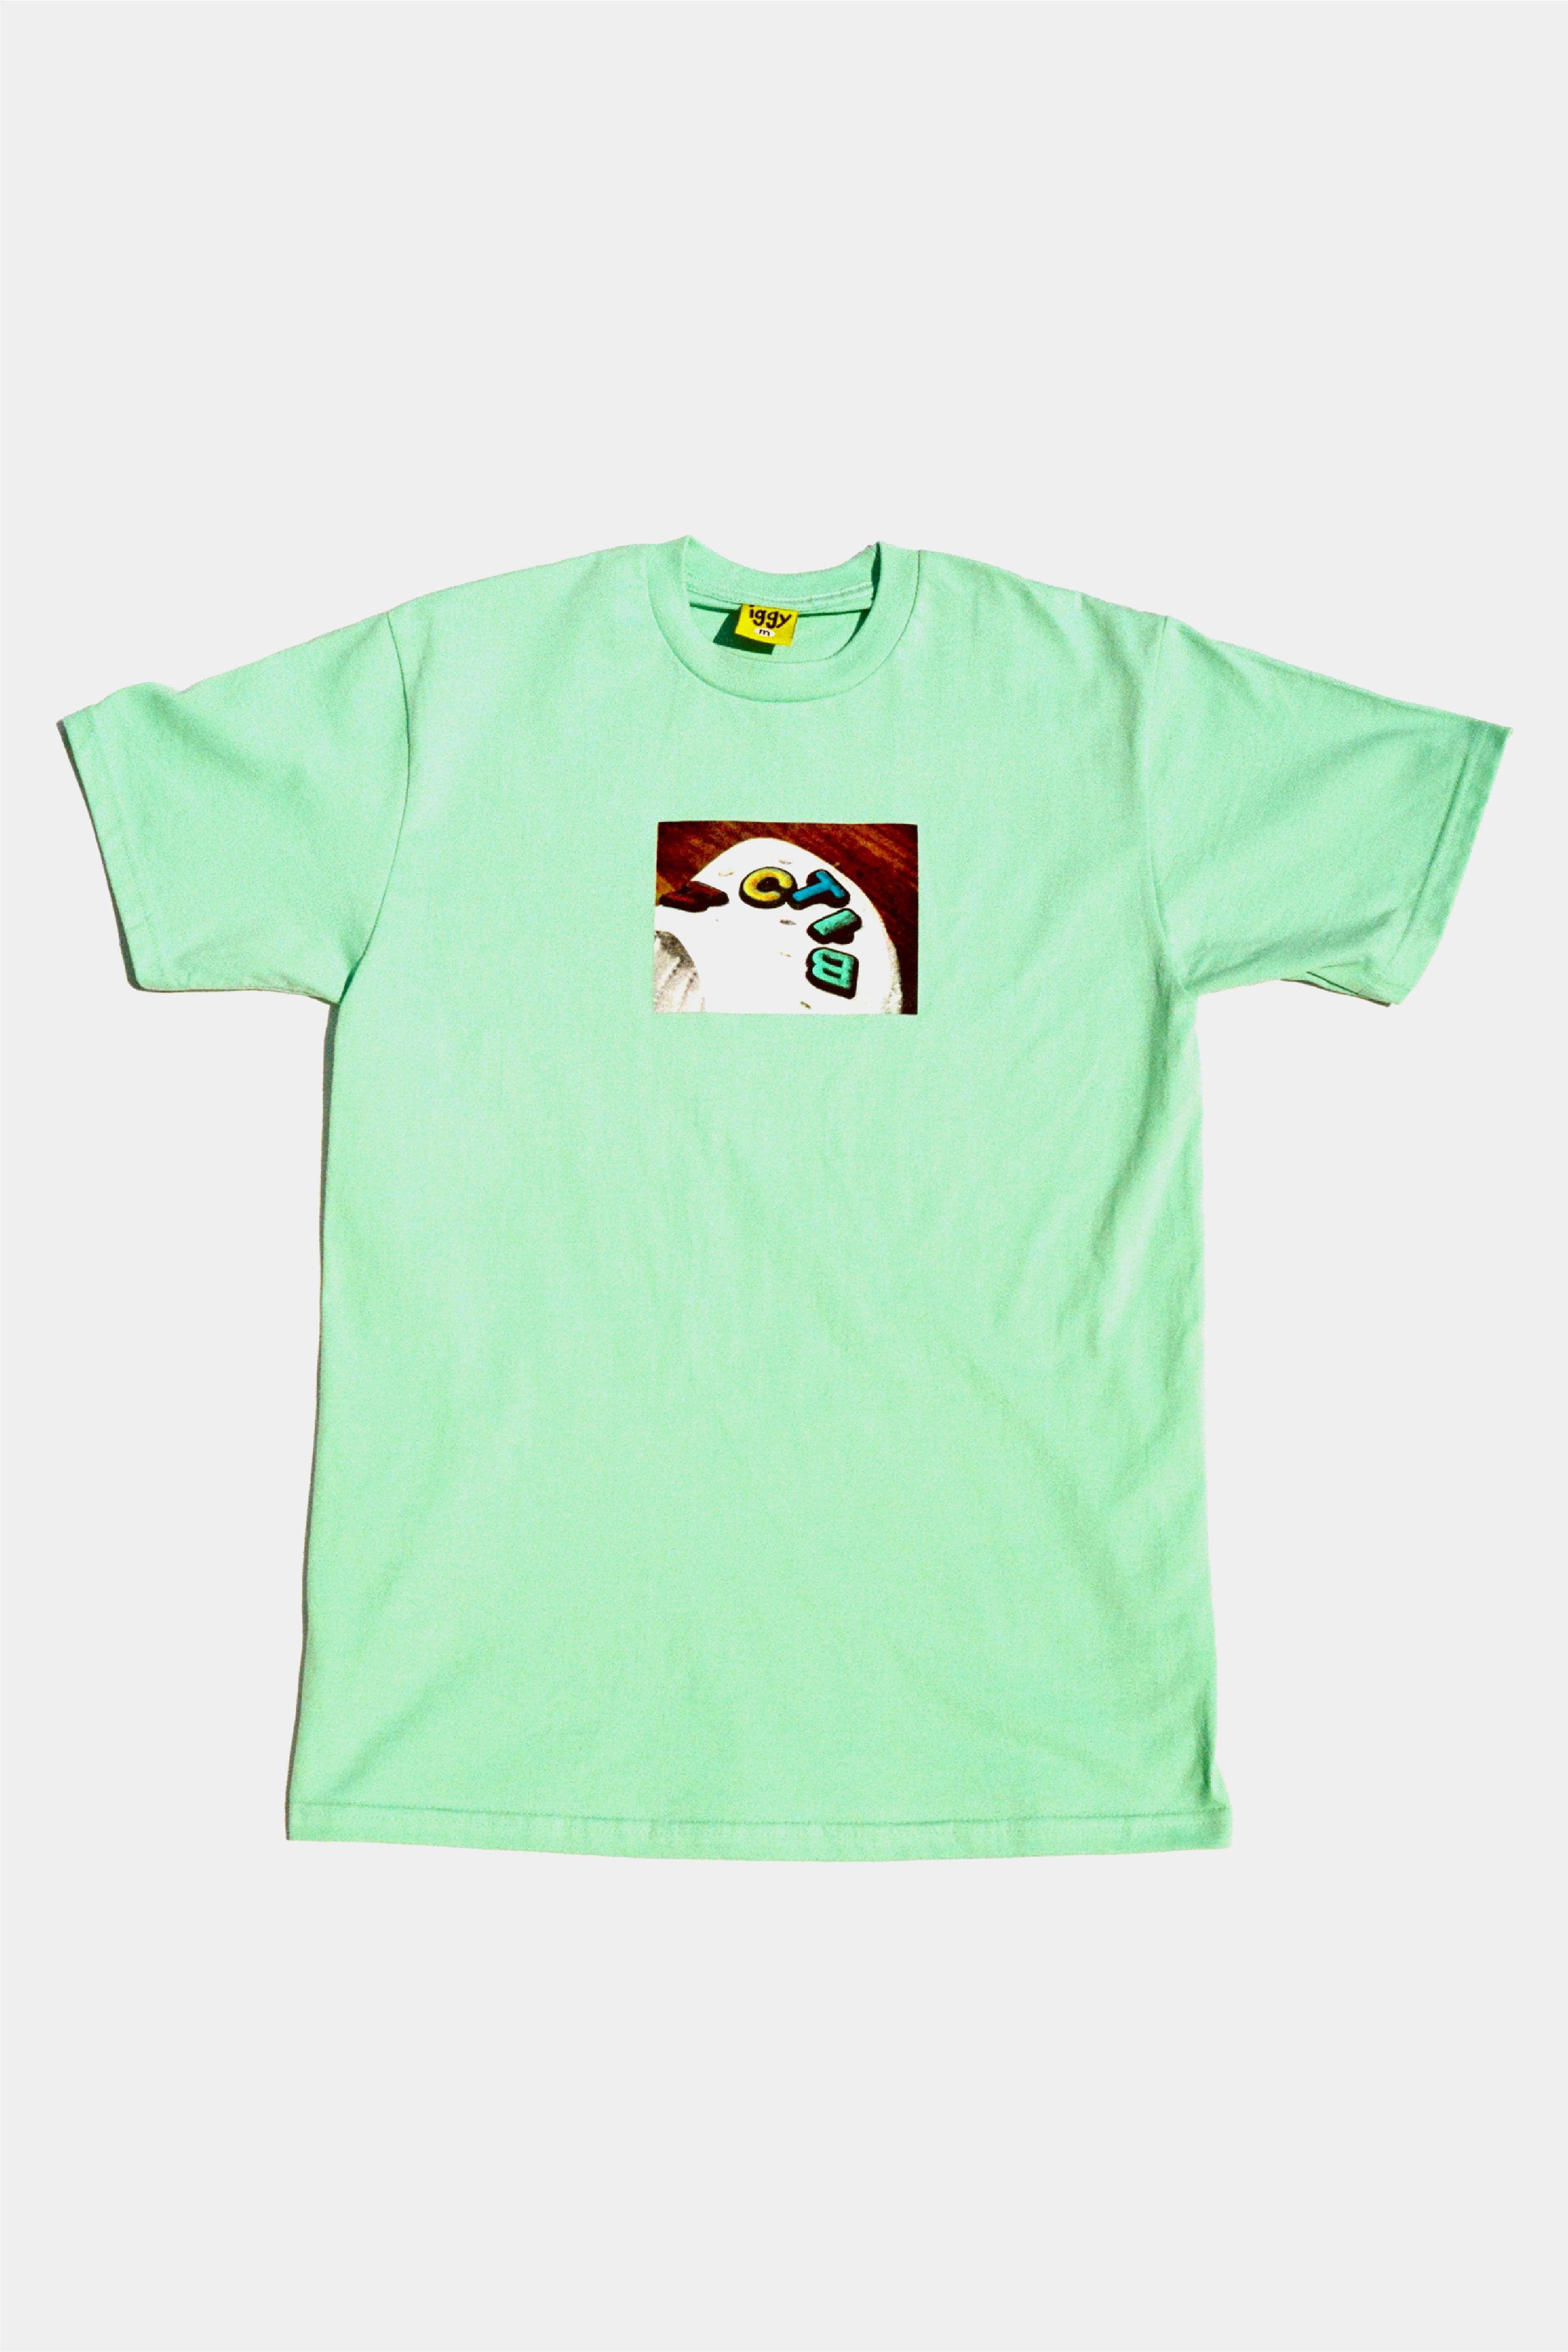 Selectshop FRAME - IGGY Bitch T Tee T-Shirts Dubai